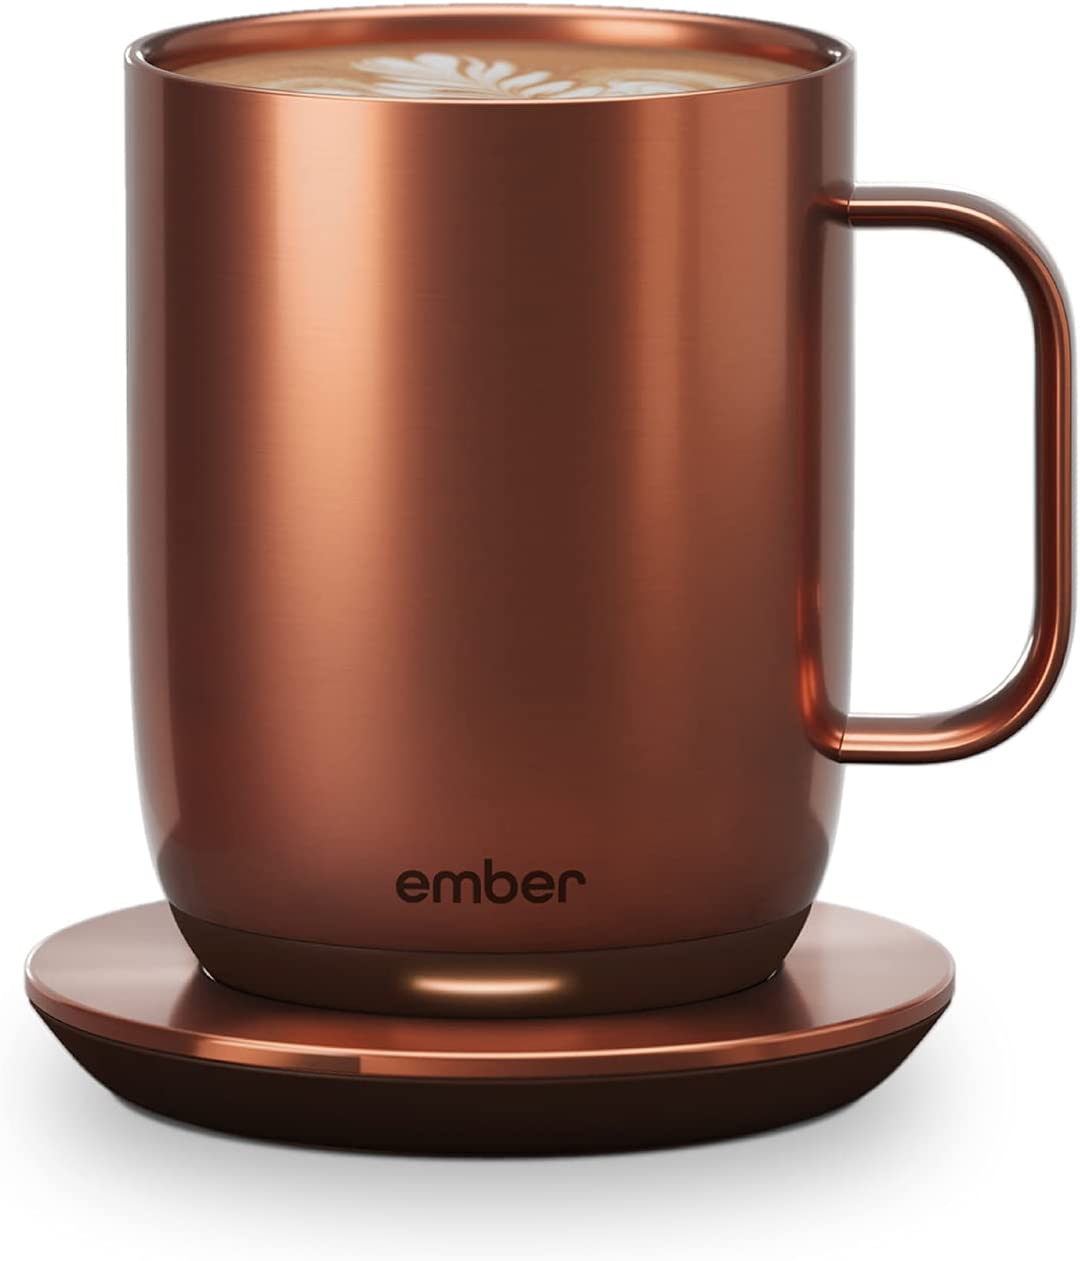 Ember - Temperature Control Smart Coffee Mug² - 14oz Copper